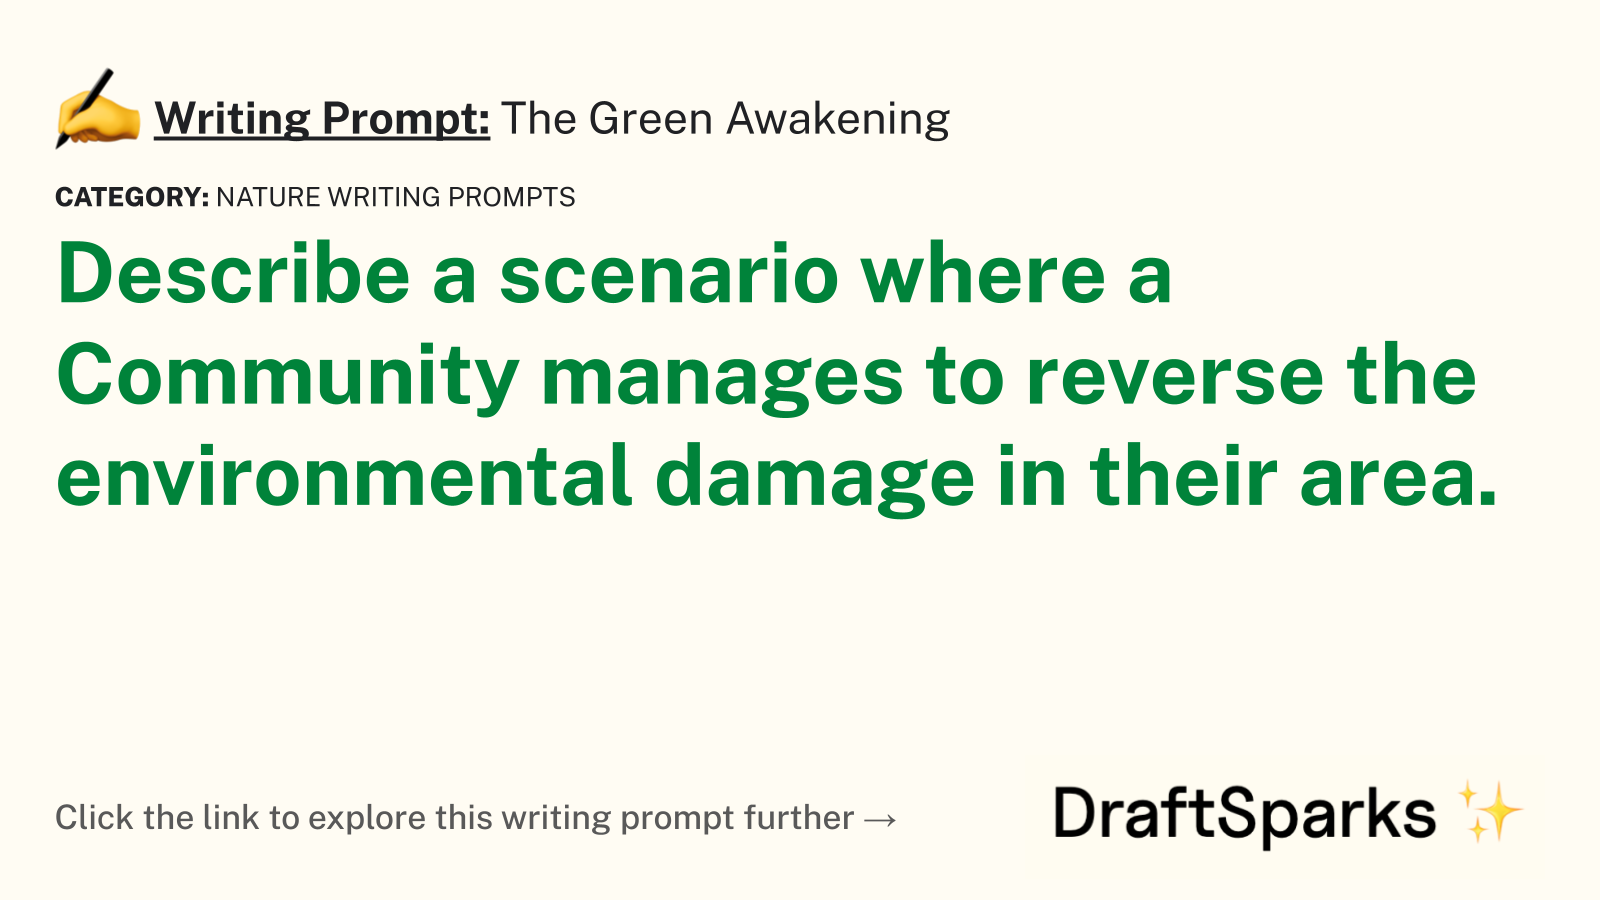 The Green Awakening